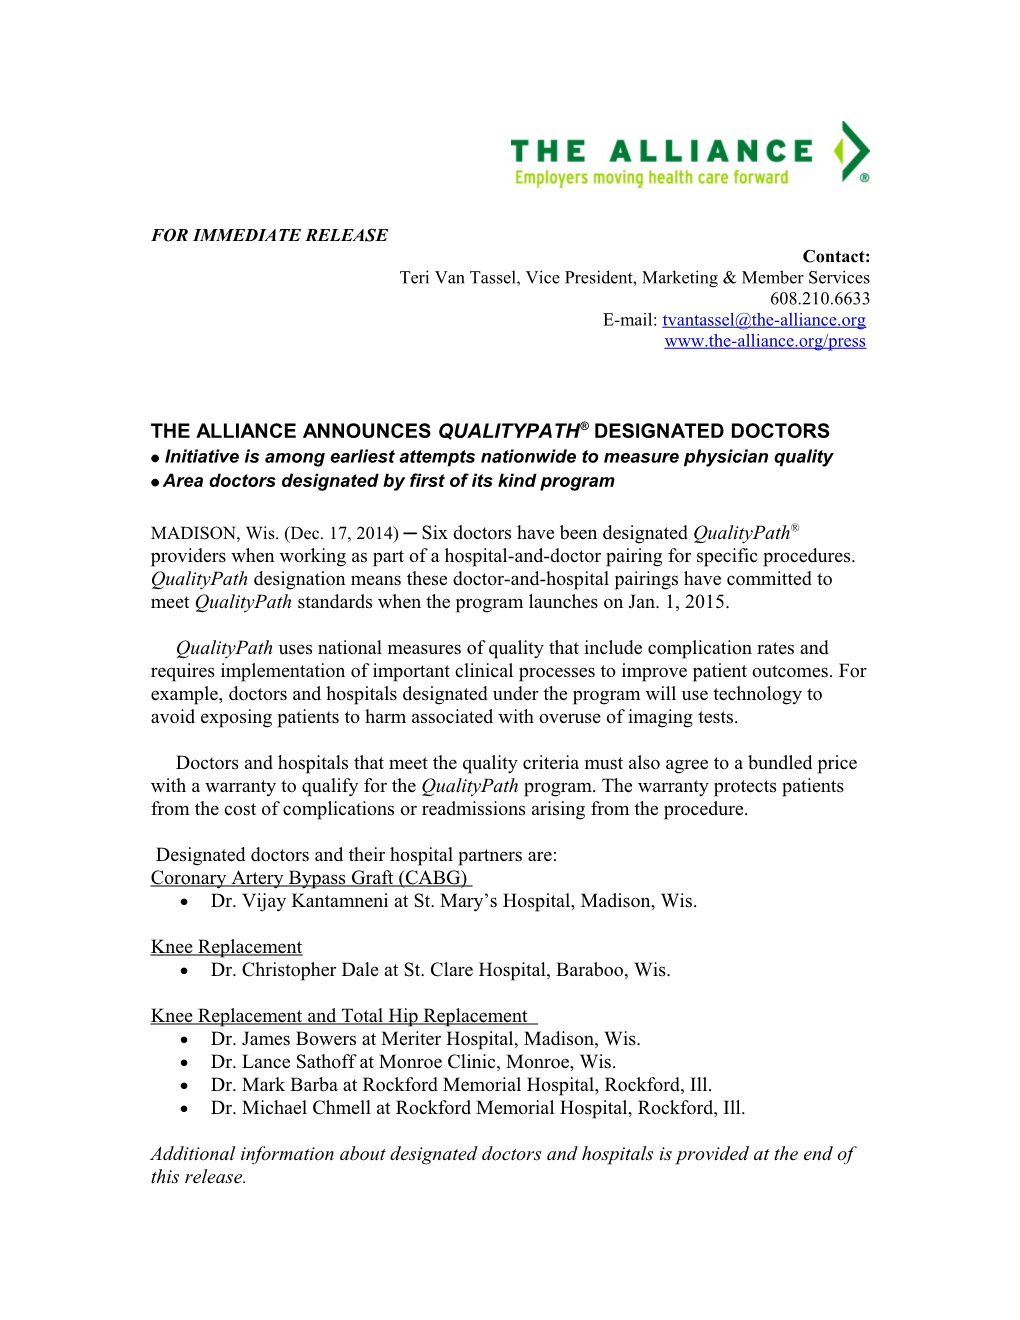 The Alliance Announces Qualitypath Designated Doctors